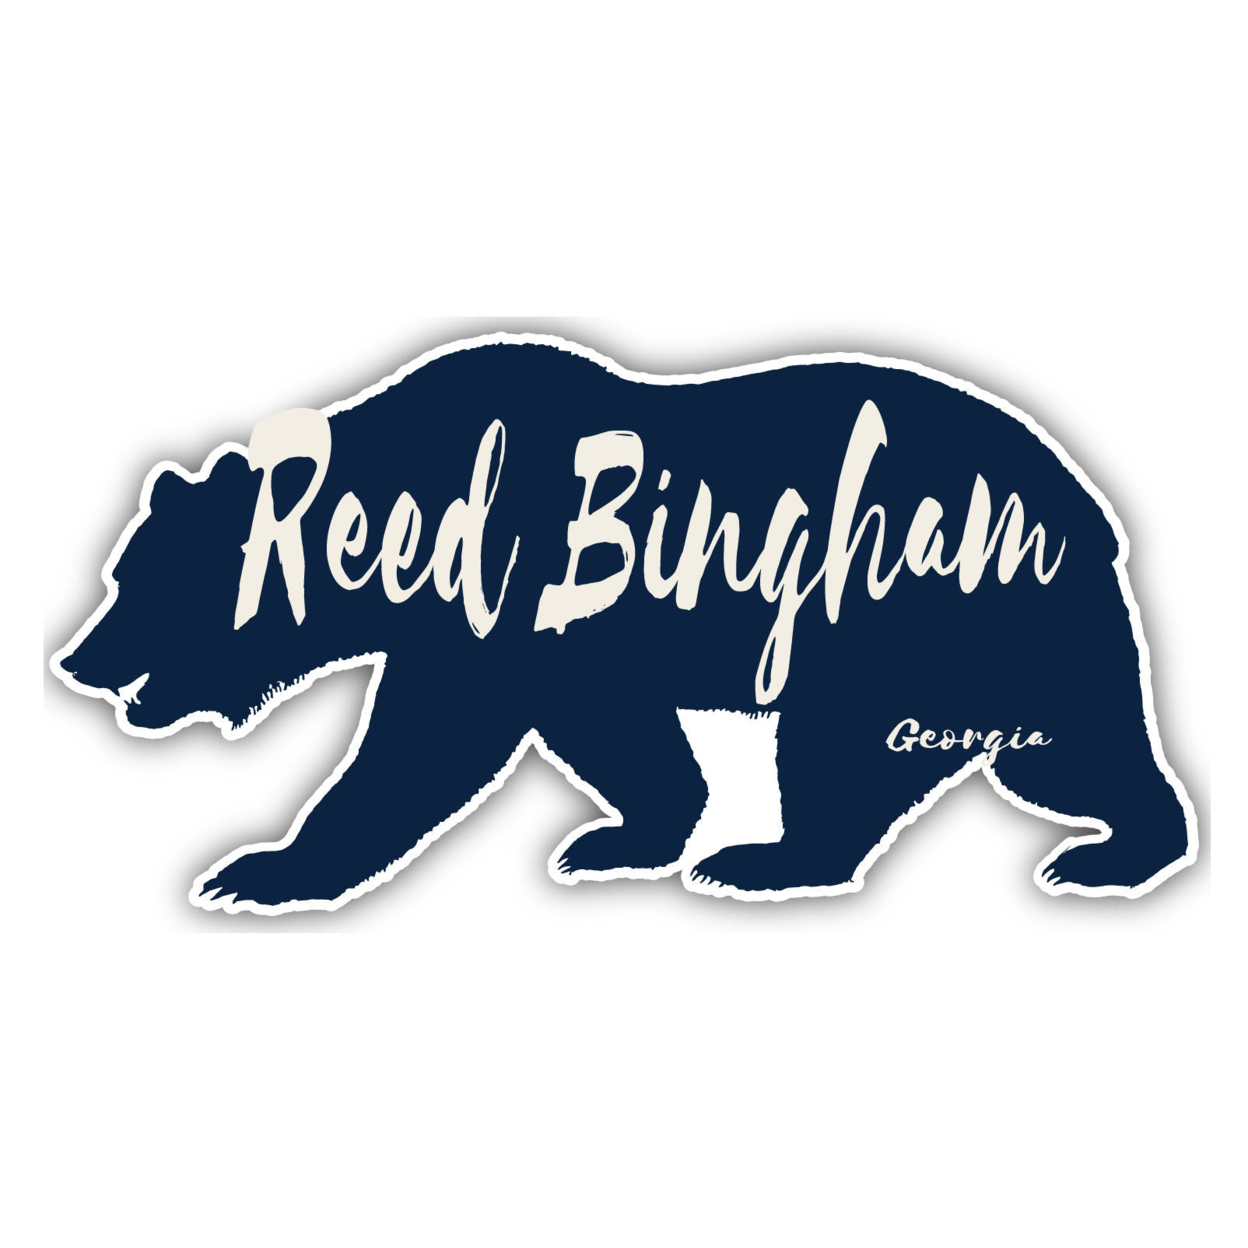 Reed Bingham Georgia Souvenir Decorative Stickers (Choose Theme And Size) - Single Unit, 4-Inch, Bear